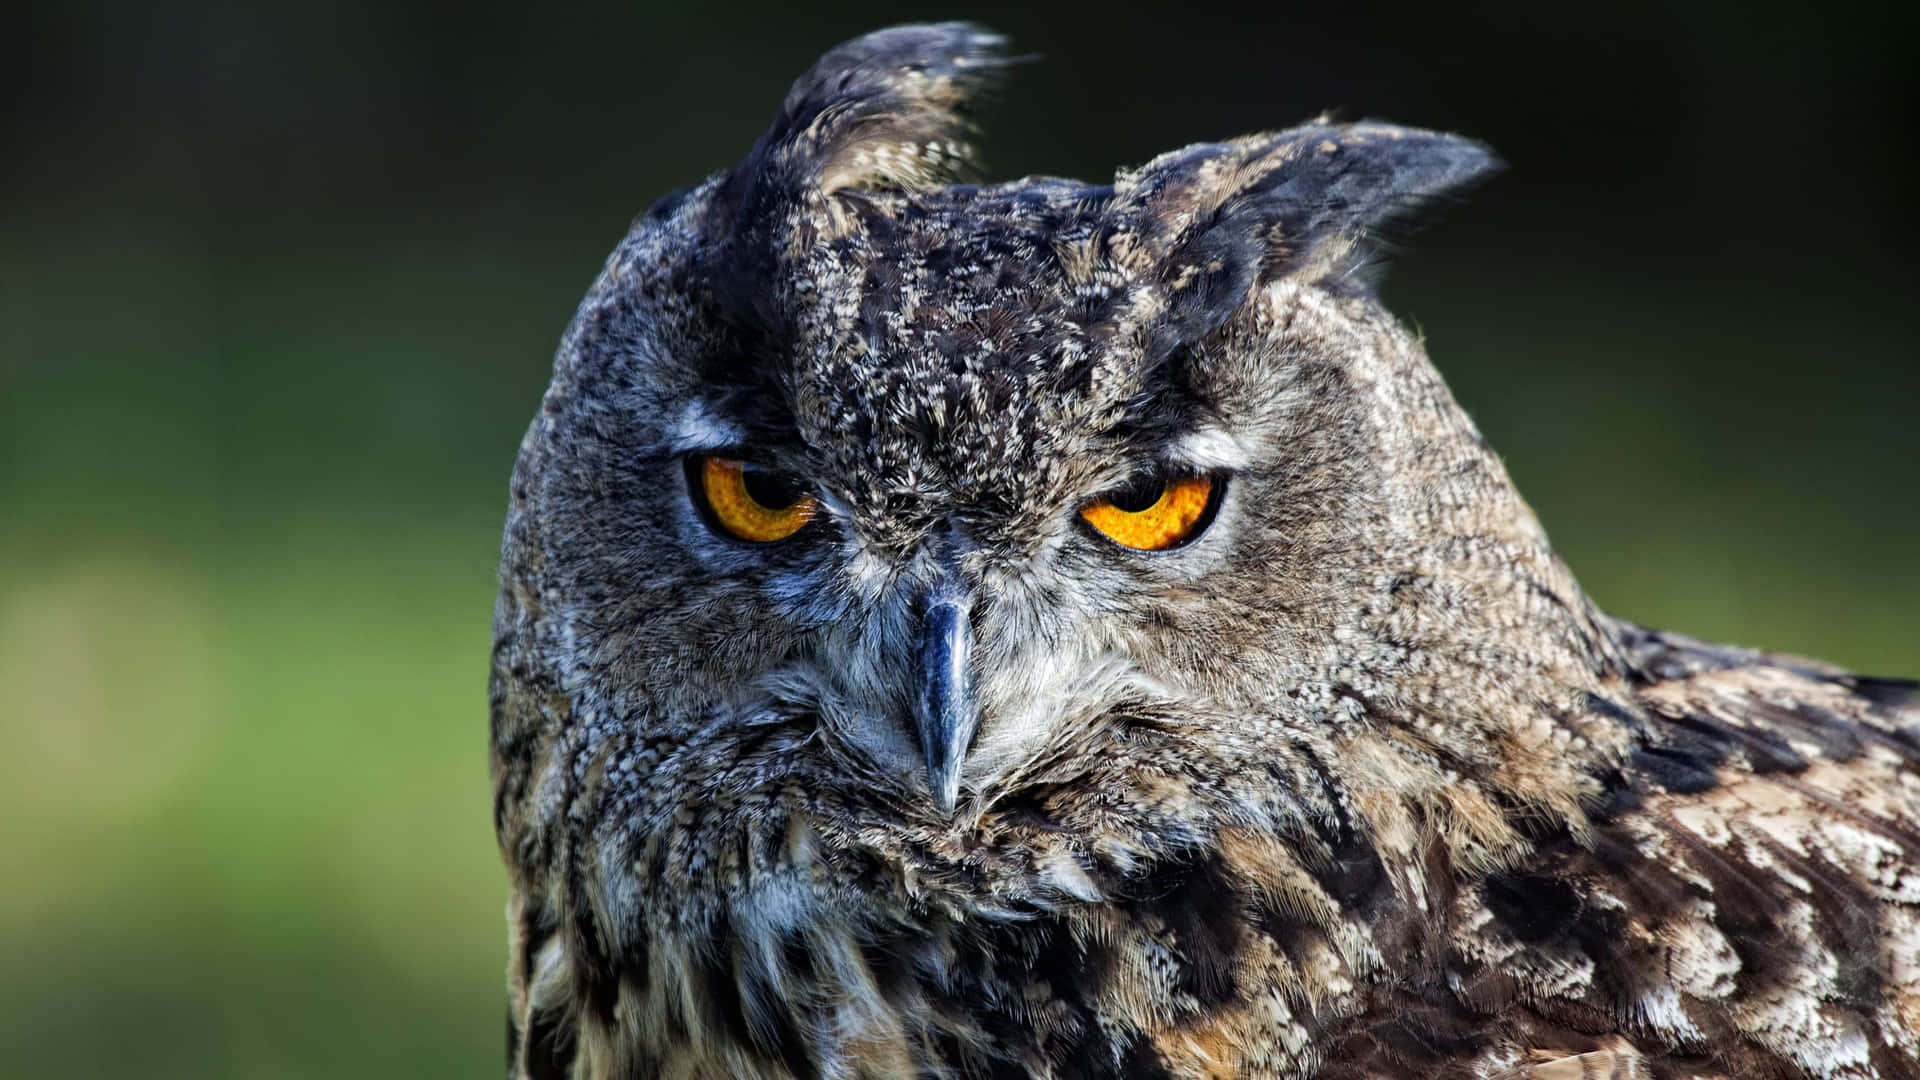 Wise Owl Surveying Its Surroundings